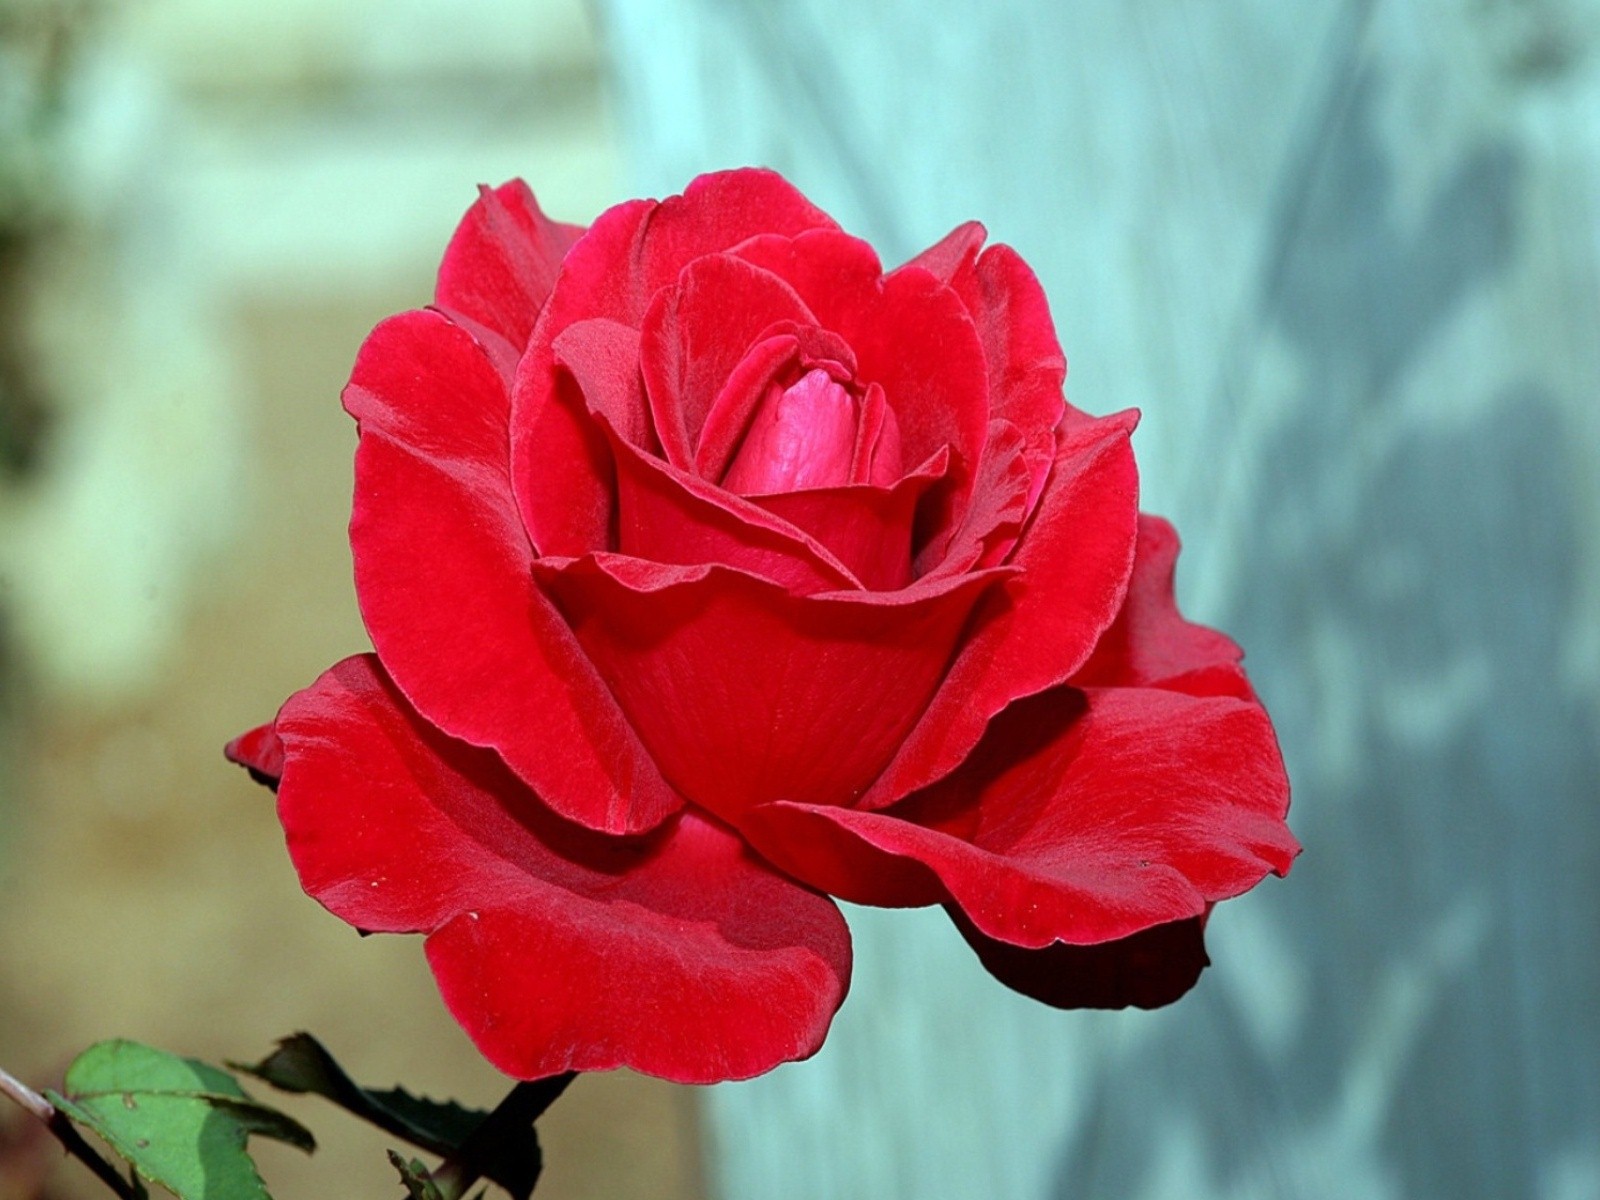 rose images hd wallpaper,flower,flowering plant,petal,garden roses,red